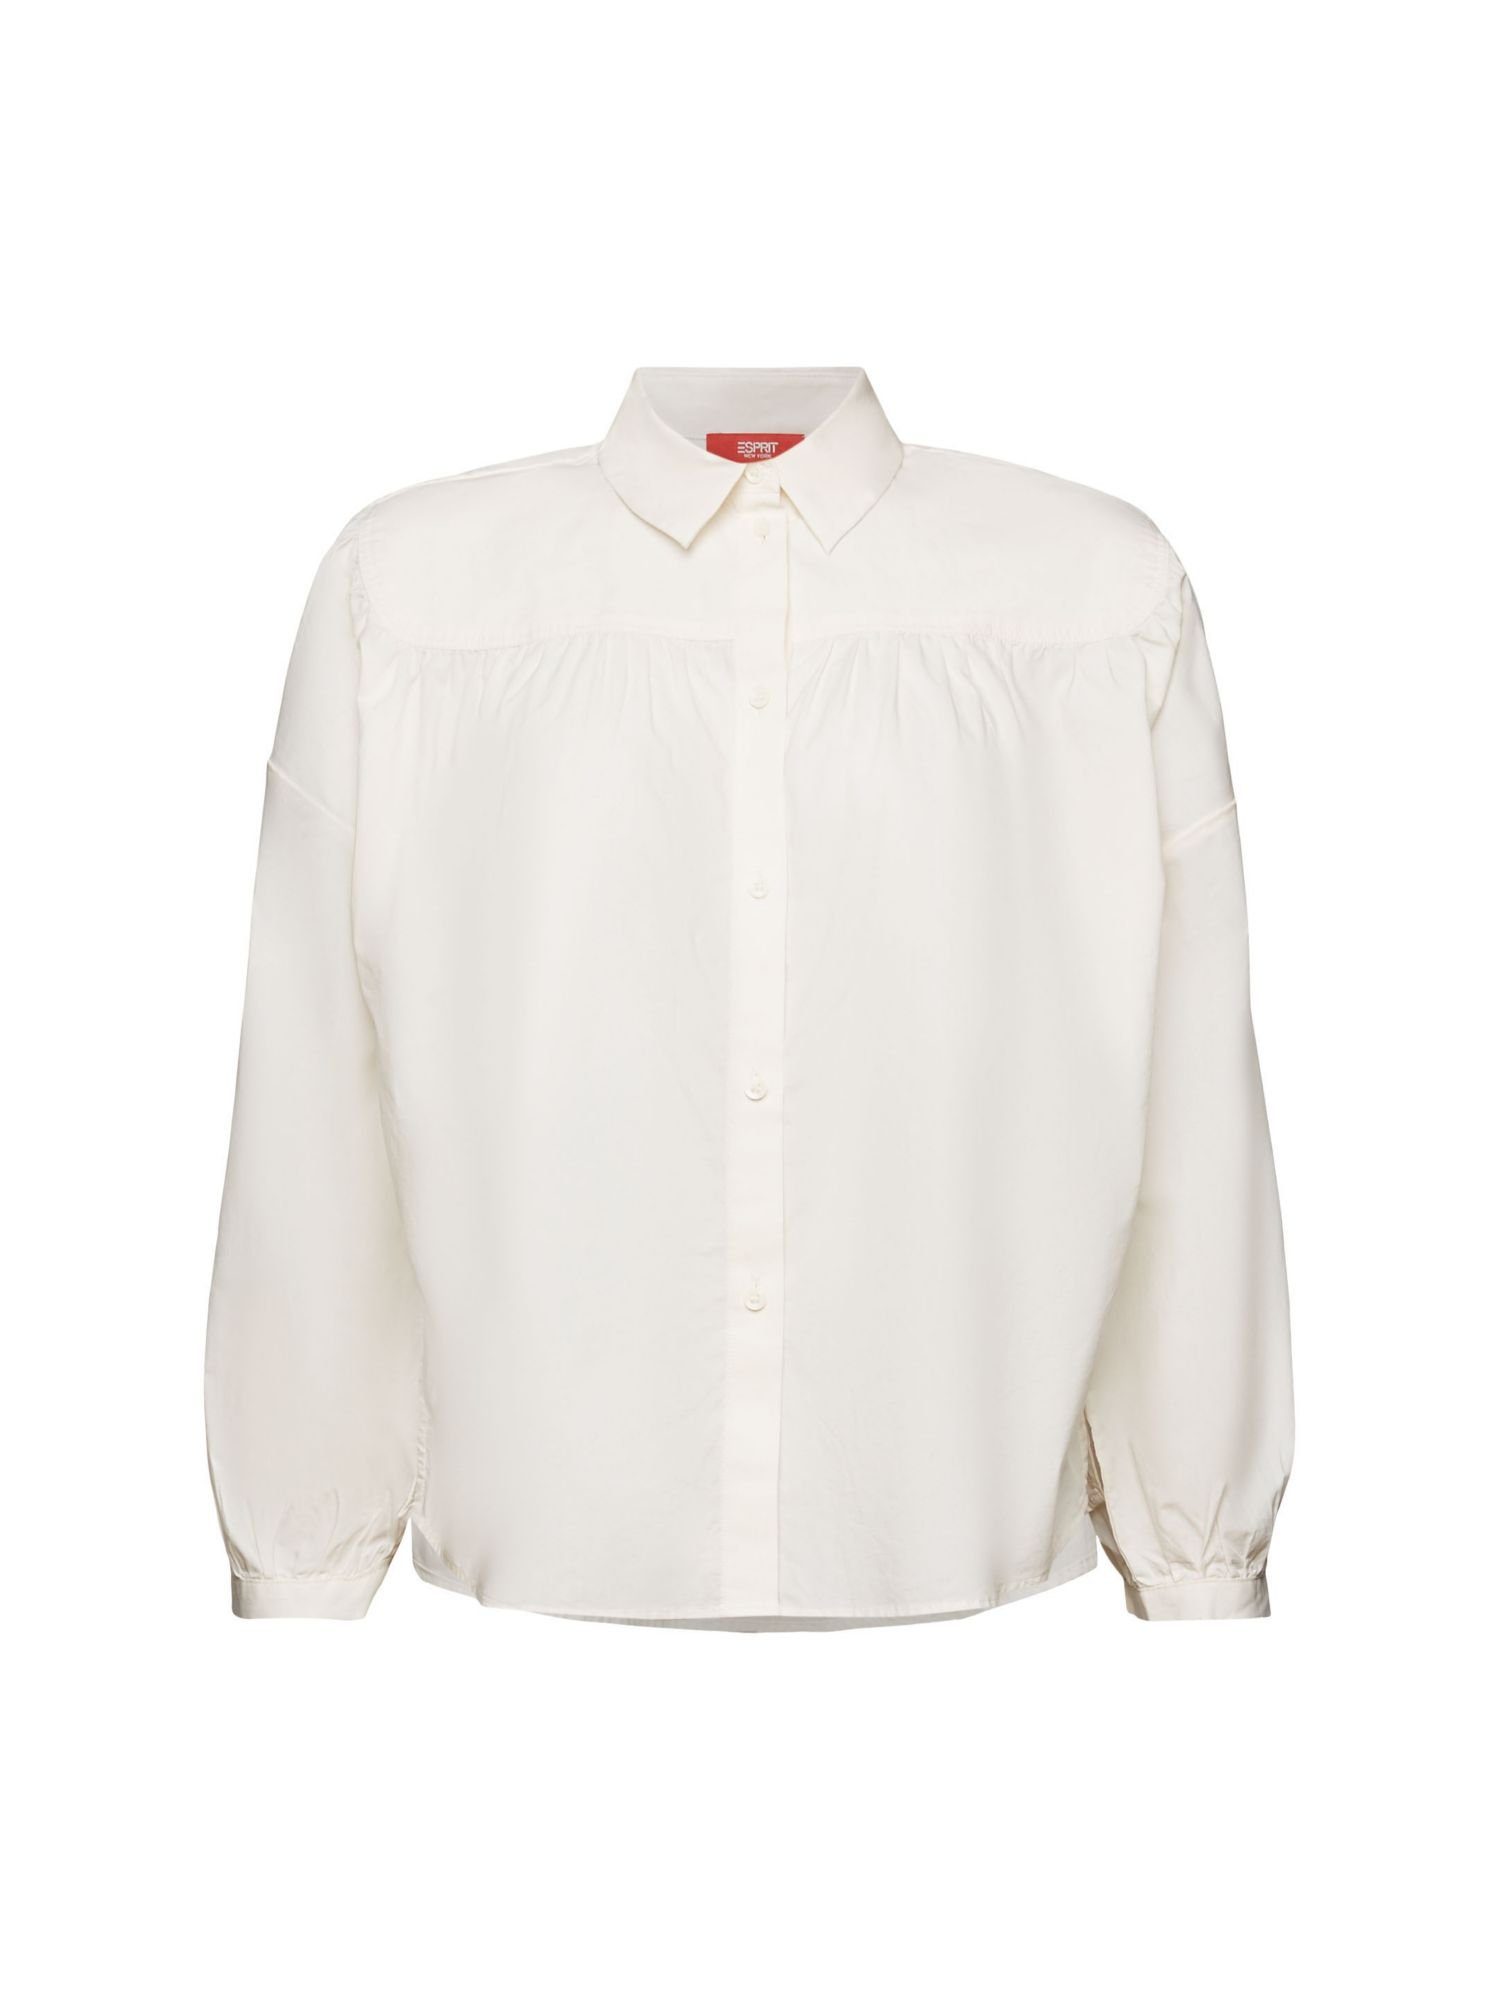 Esprit Collection Hemdbluse Popeline-Bluse, 100 % Baumwolle